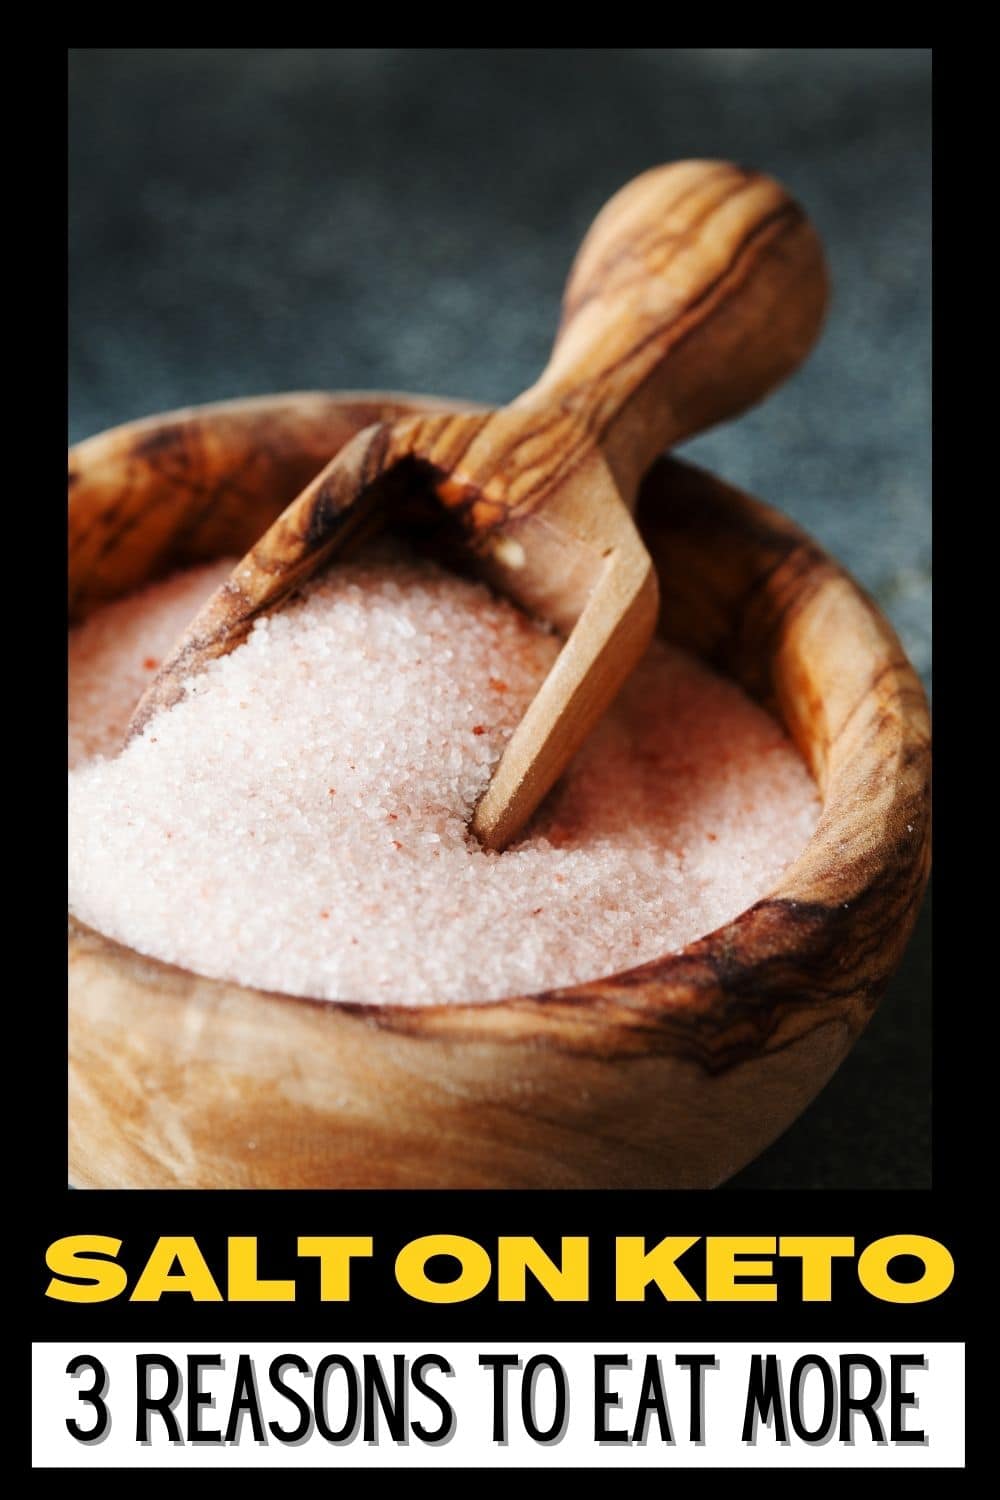 salt on keto image with yellow text